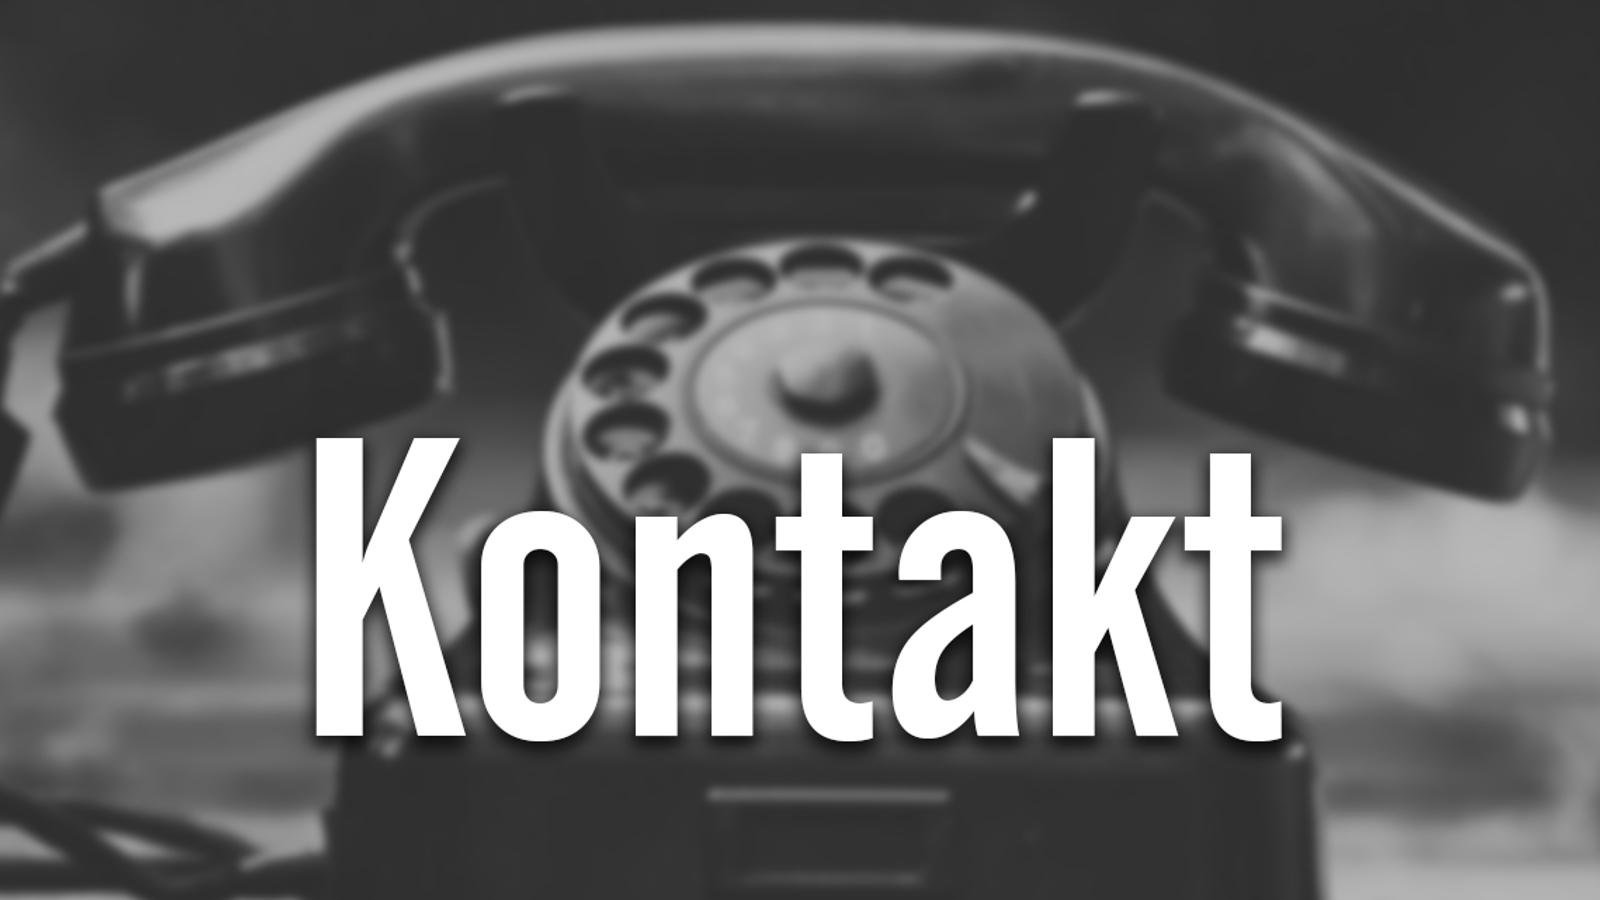 En bild på en snurrtelefon med texten "Kontakt".